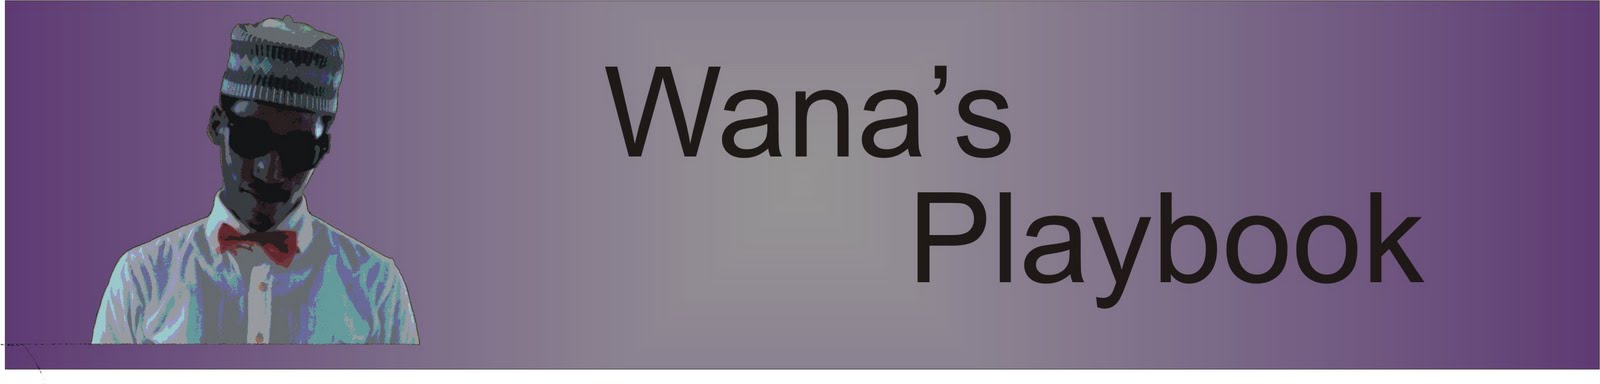 Wana's Playbook